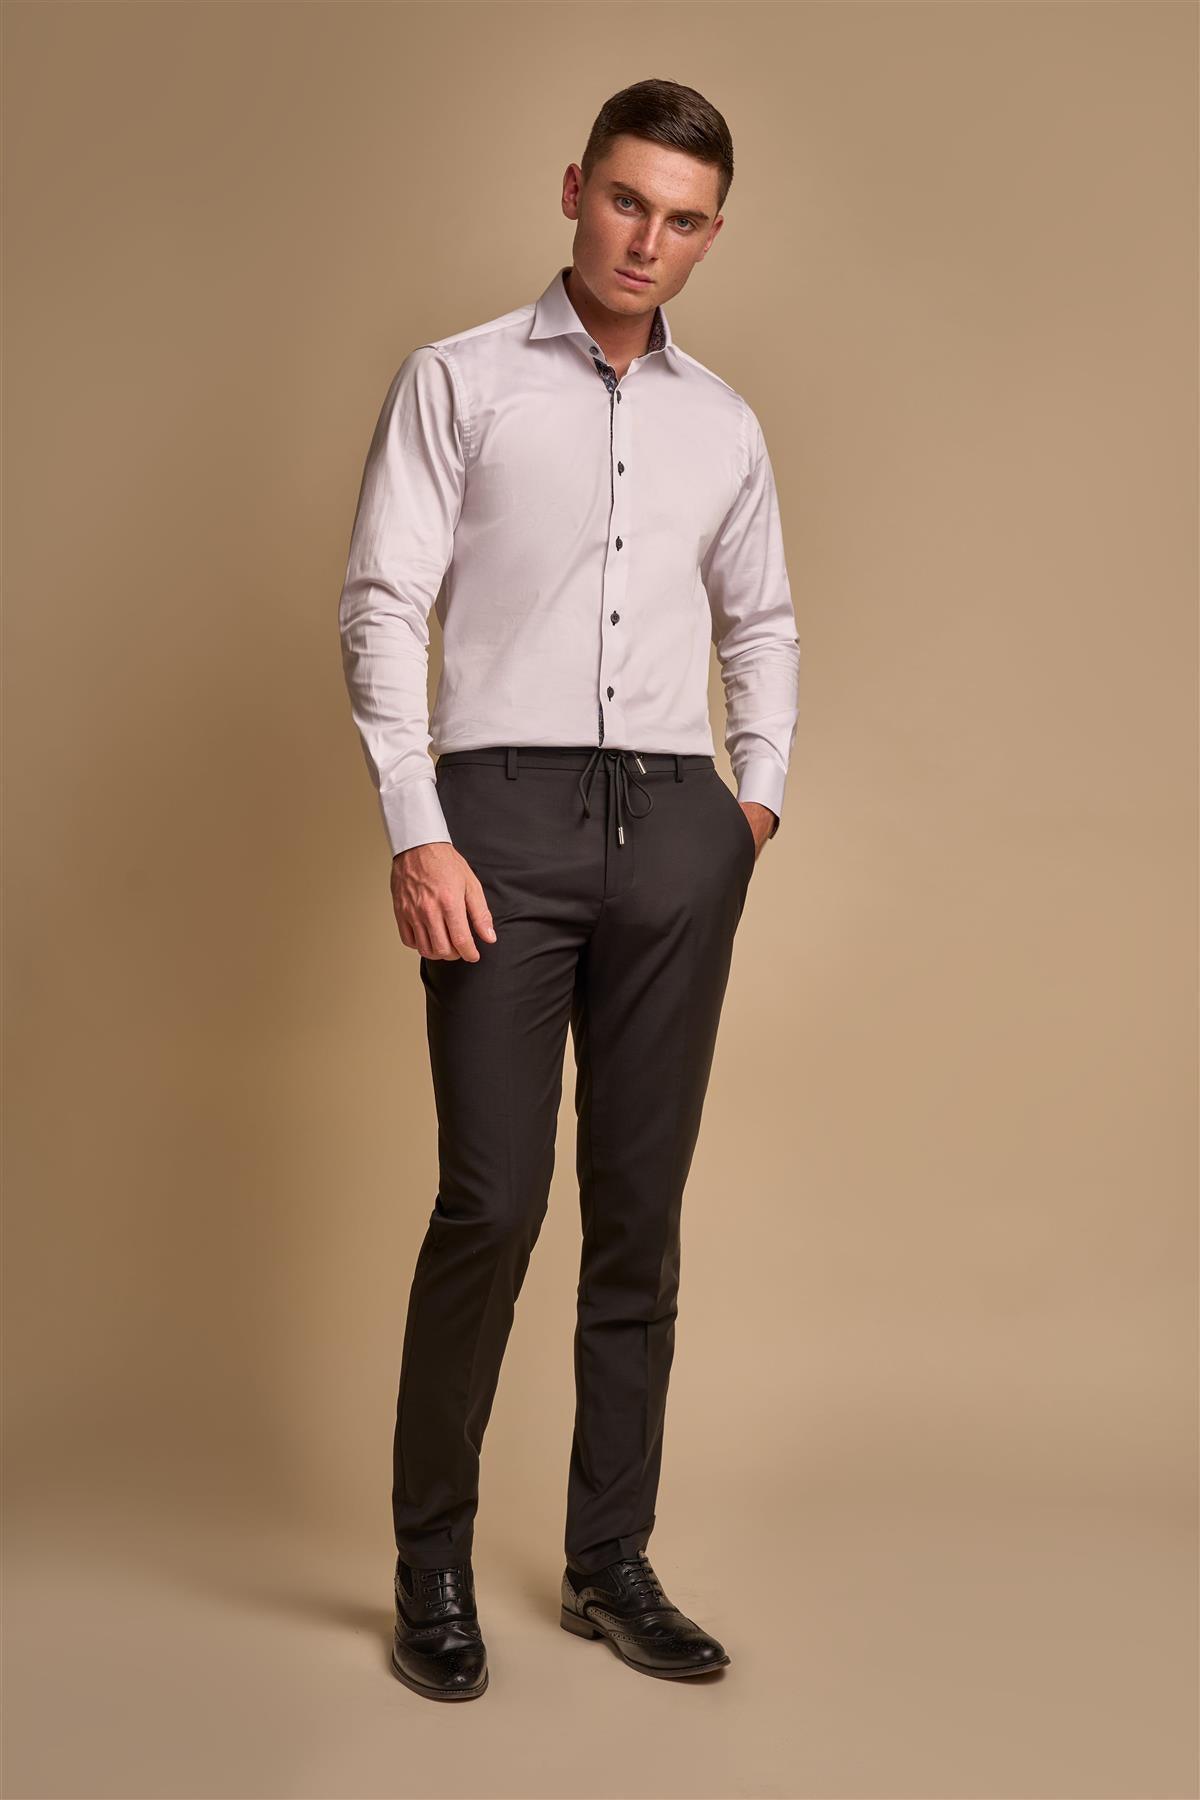 amadeur black trouser front